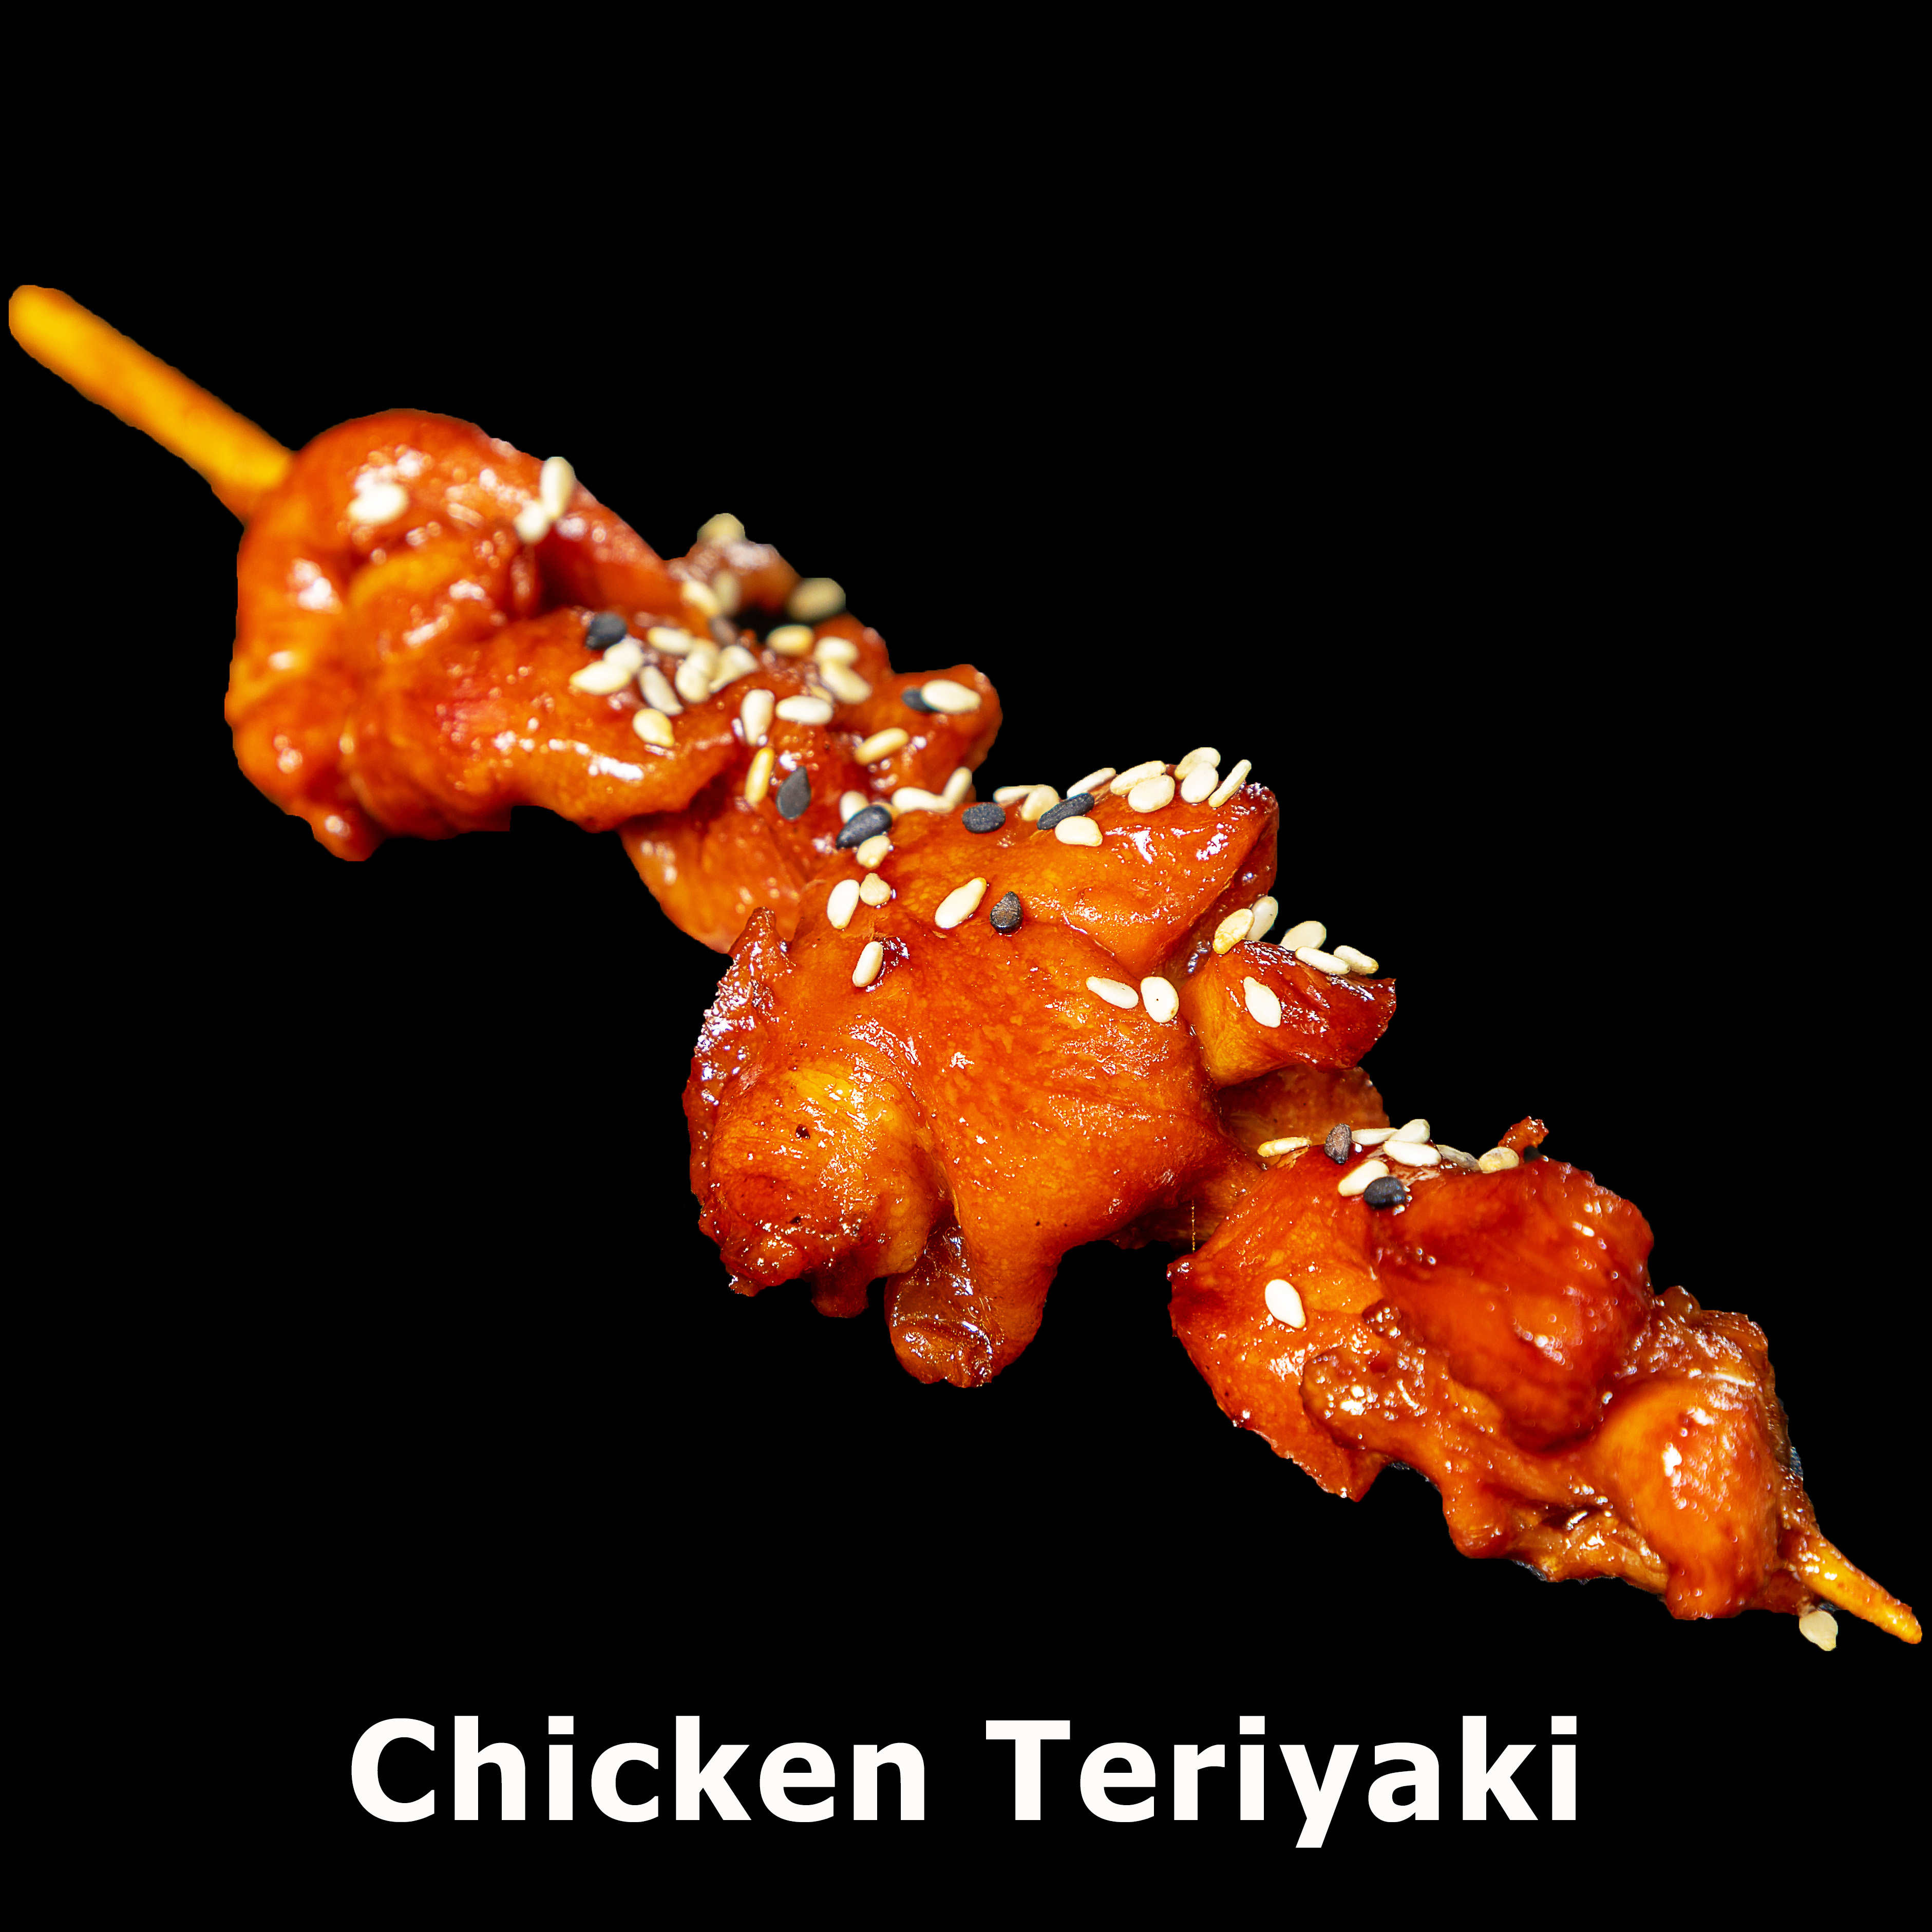 130. Chicken Teriyaki